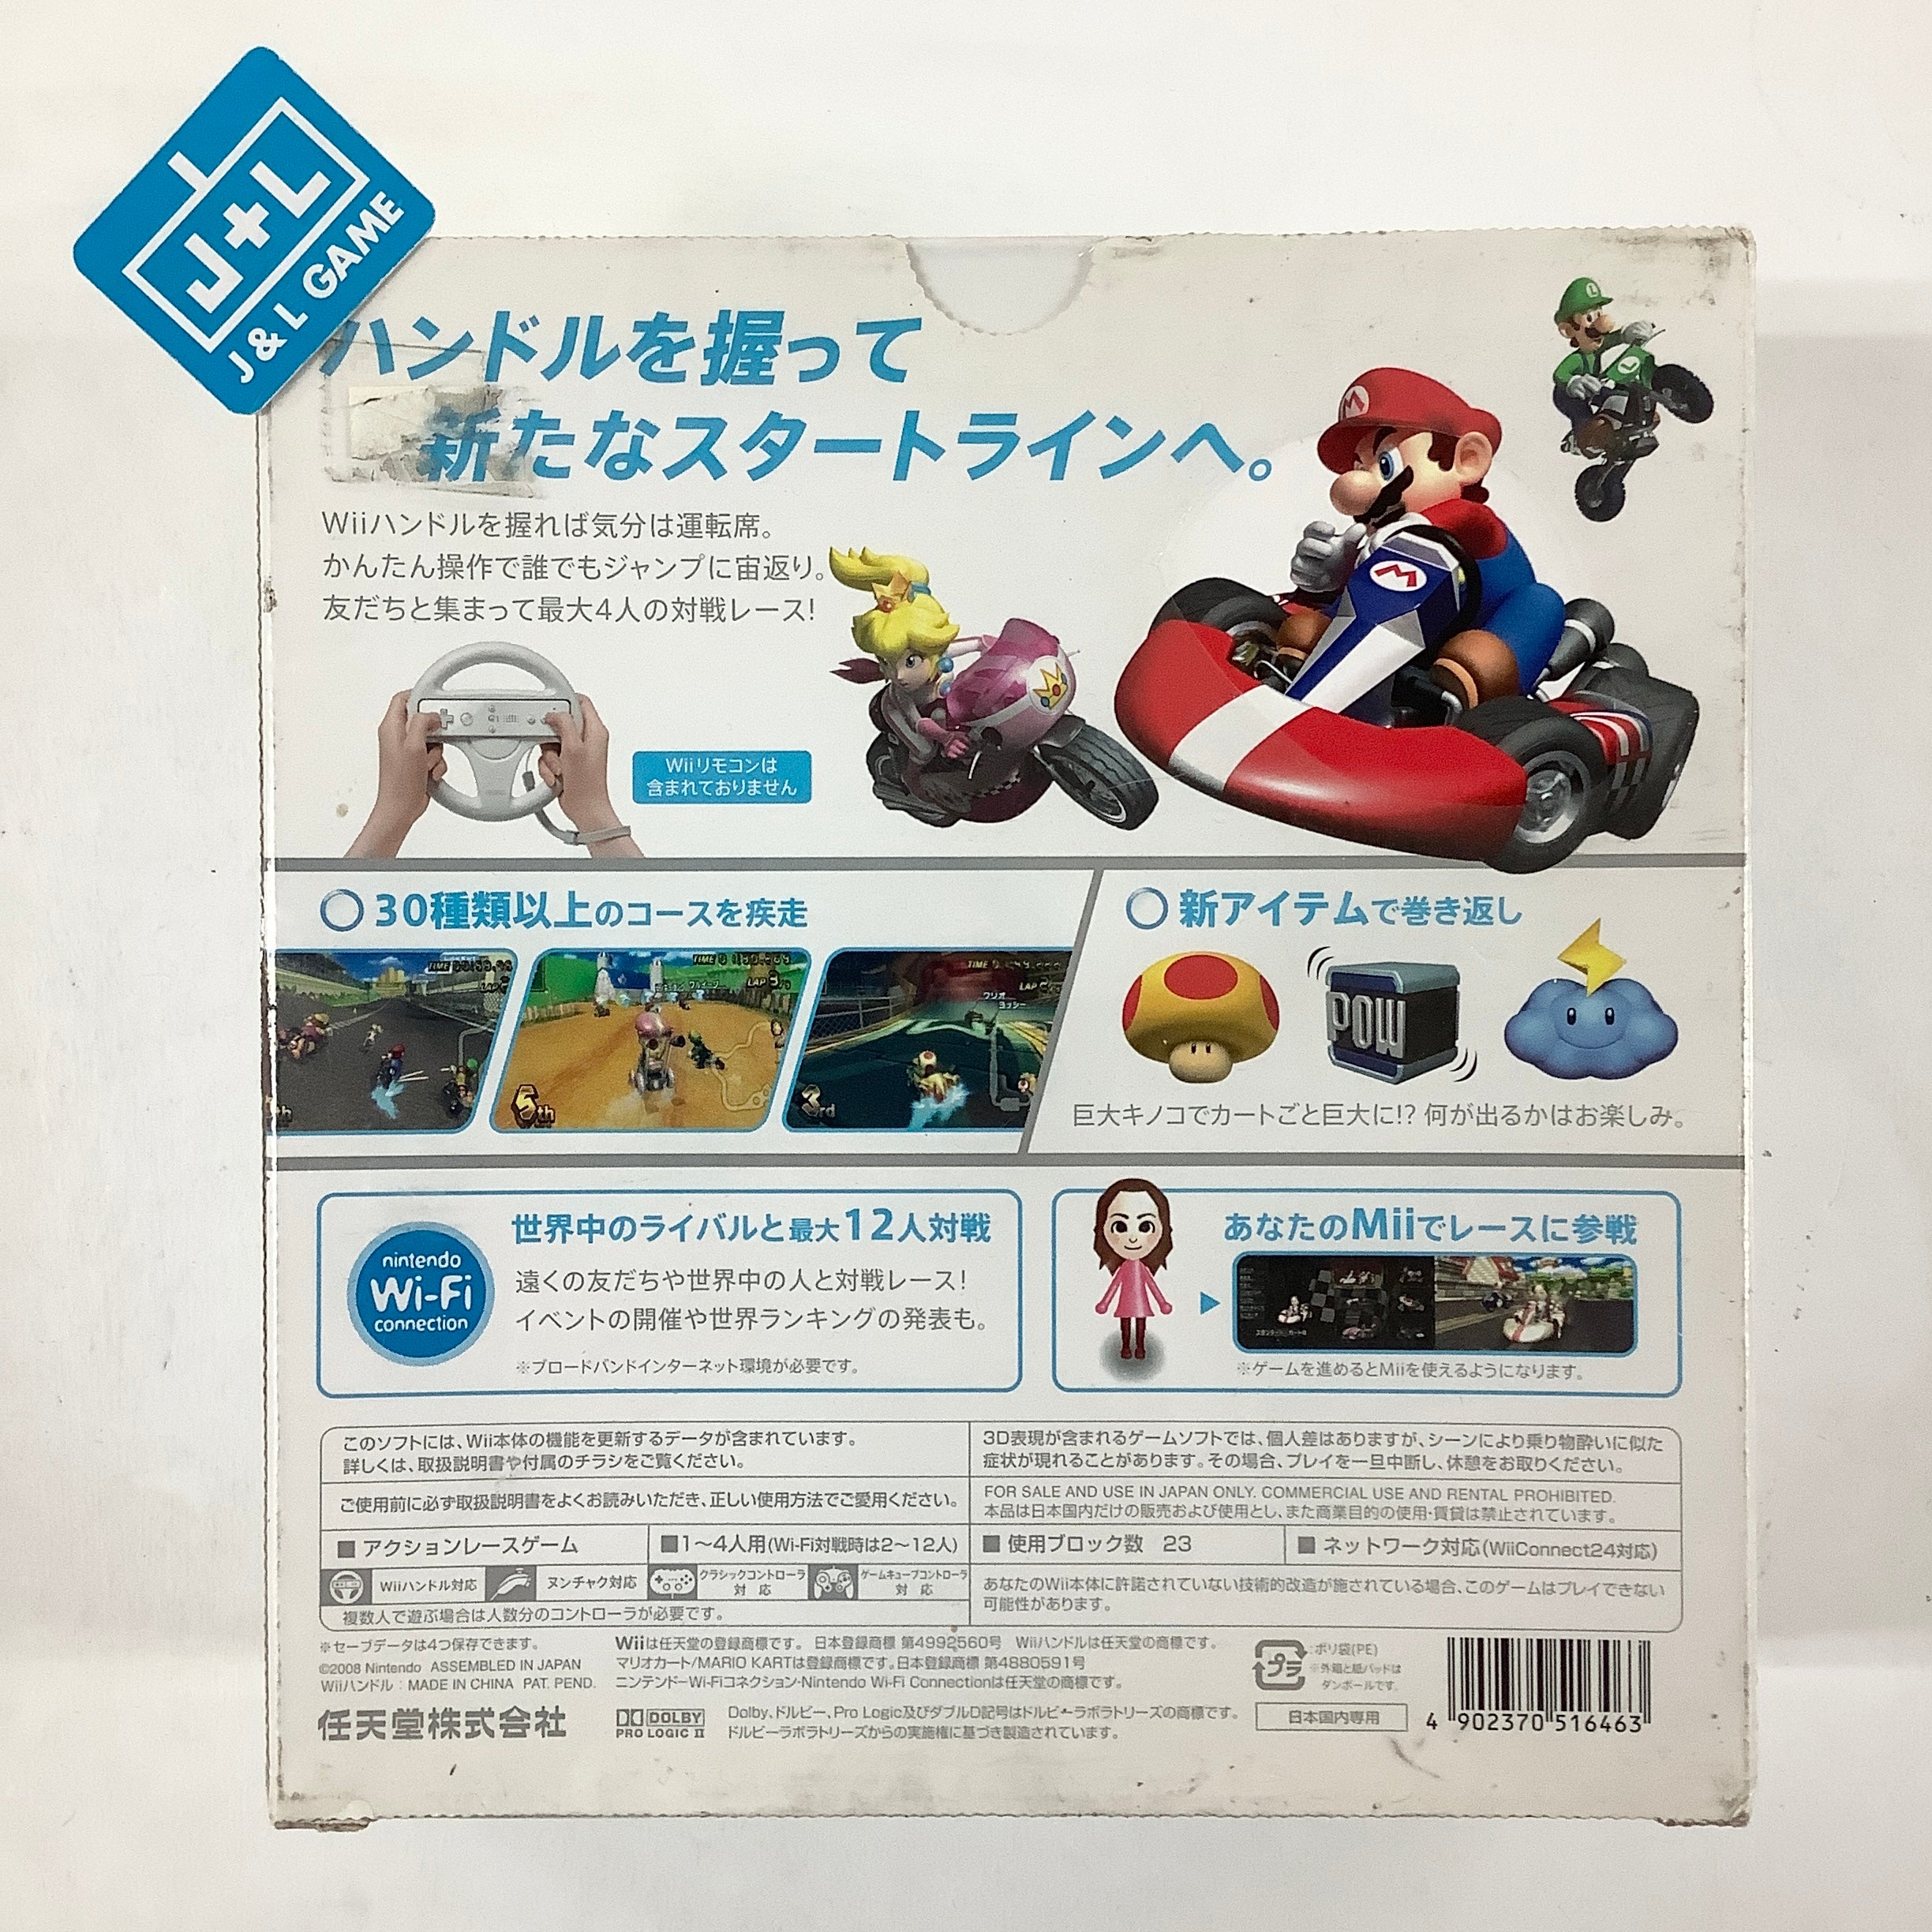 Mario Kart Wii - Nintendo Wii (Japanese Import) Video Games Nintendo   